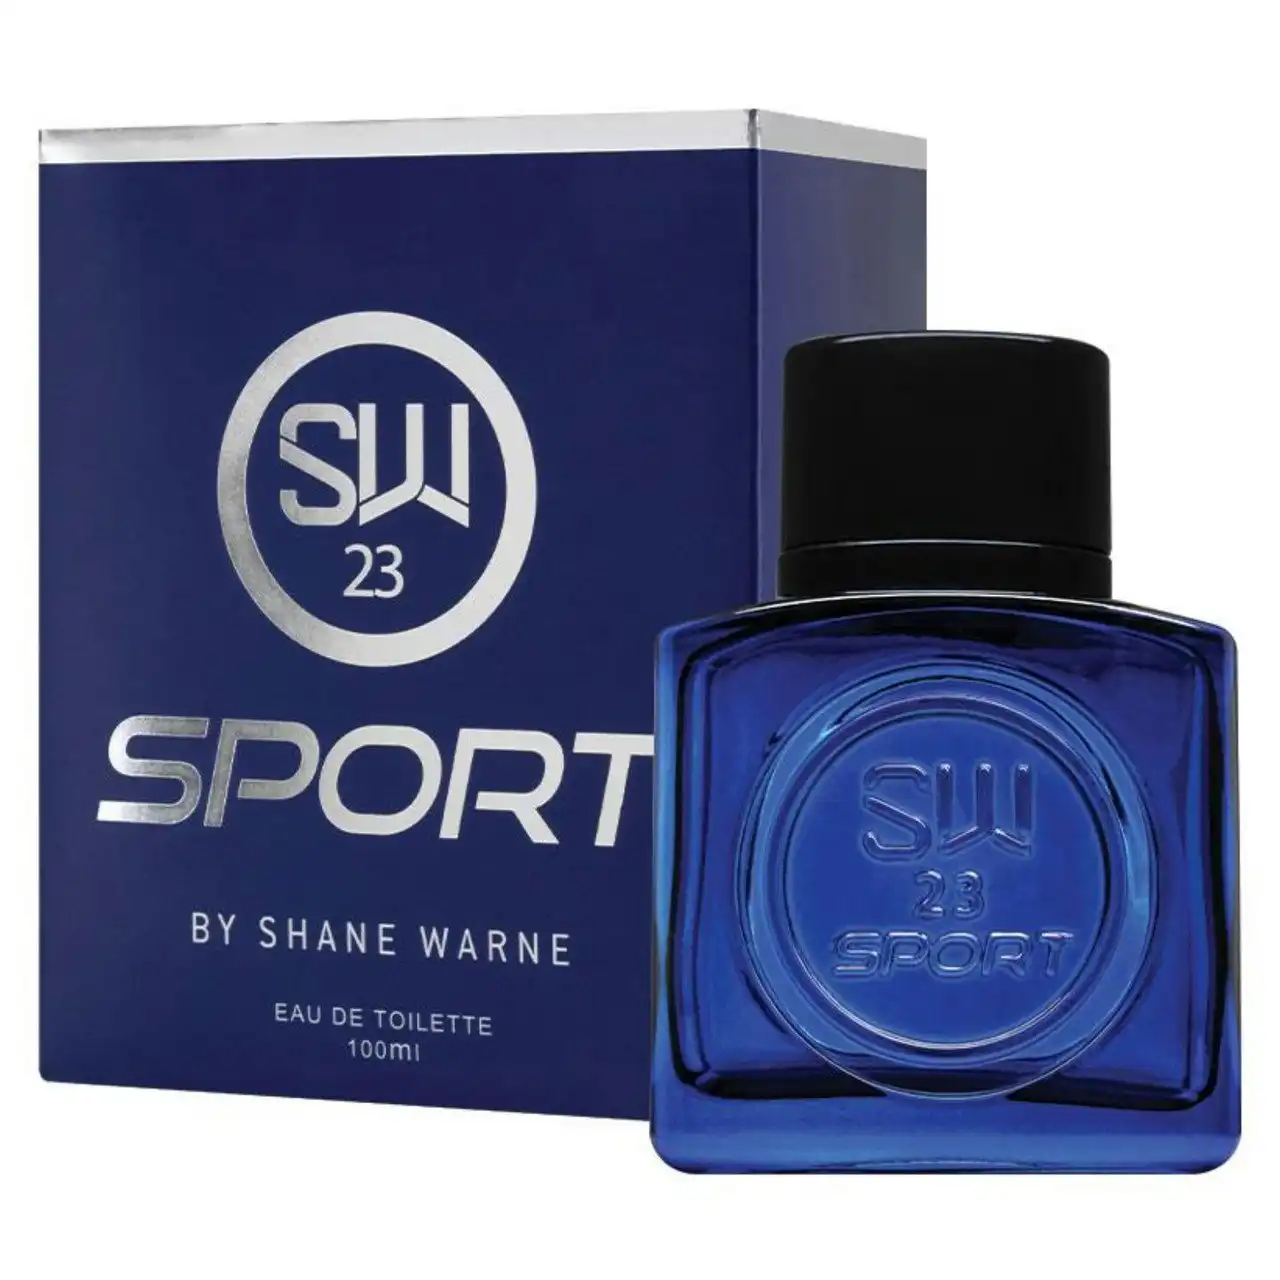 SW23 Sport 100ml EDT By Shane Warne (Mens)